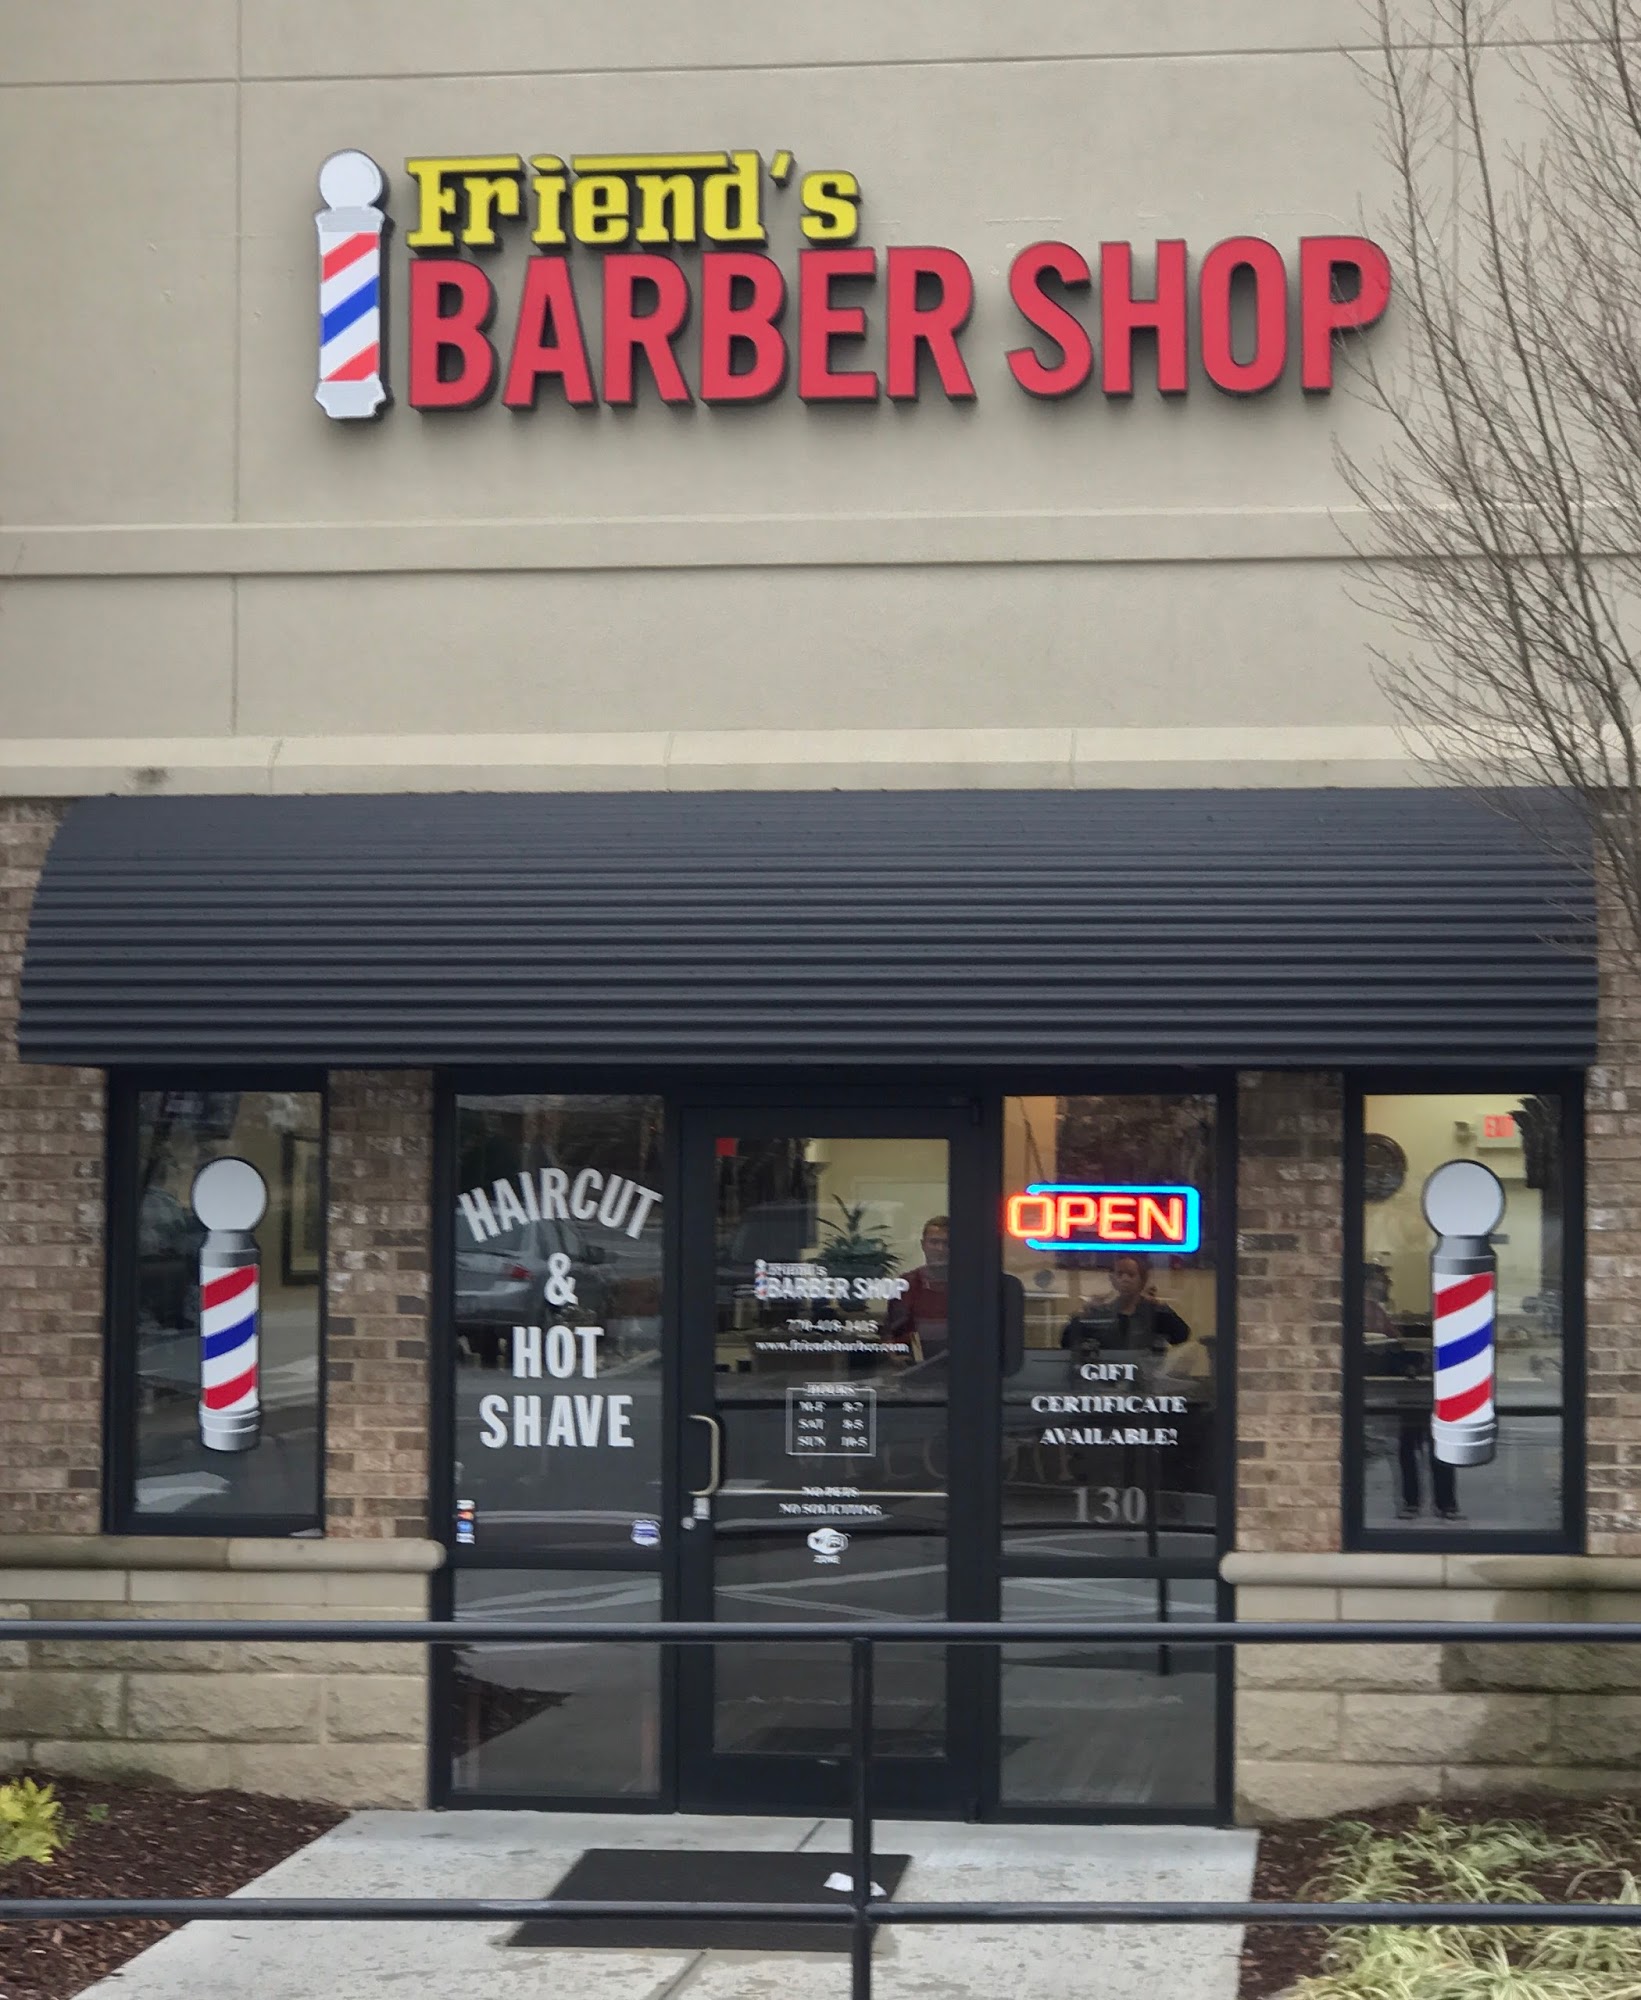 Friend's Barber Shop